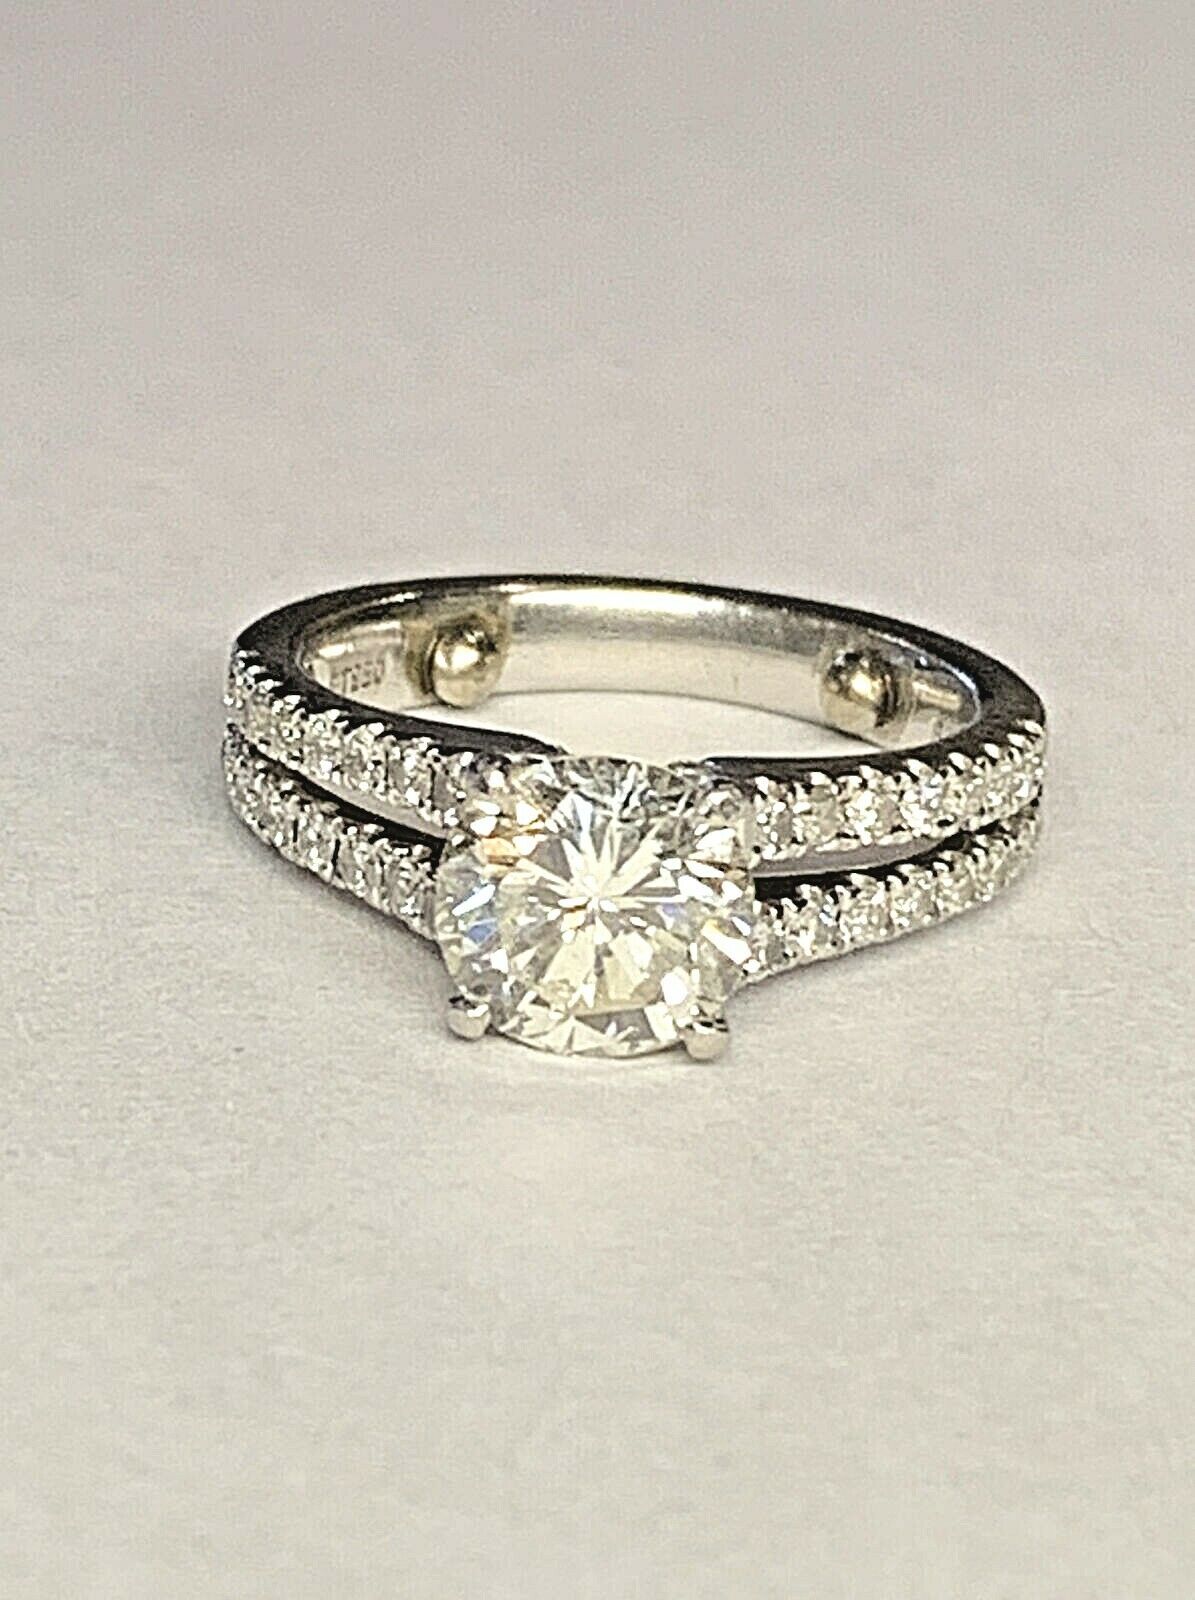 Diamond Engagement Ring 1.25 ct. J SI1 Center 1.65 tcw 950 Platinum Size 3